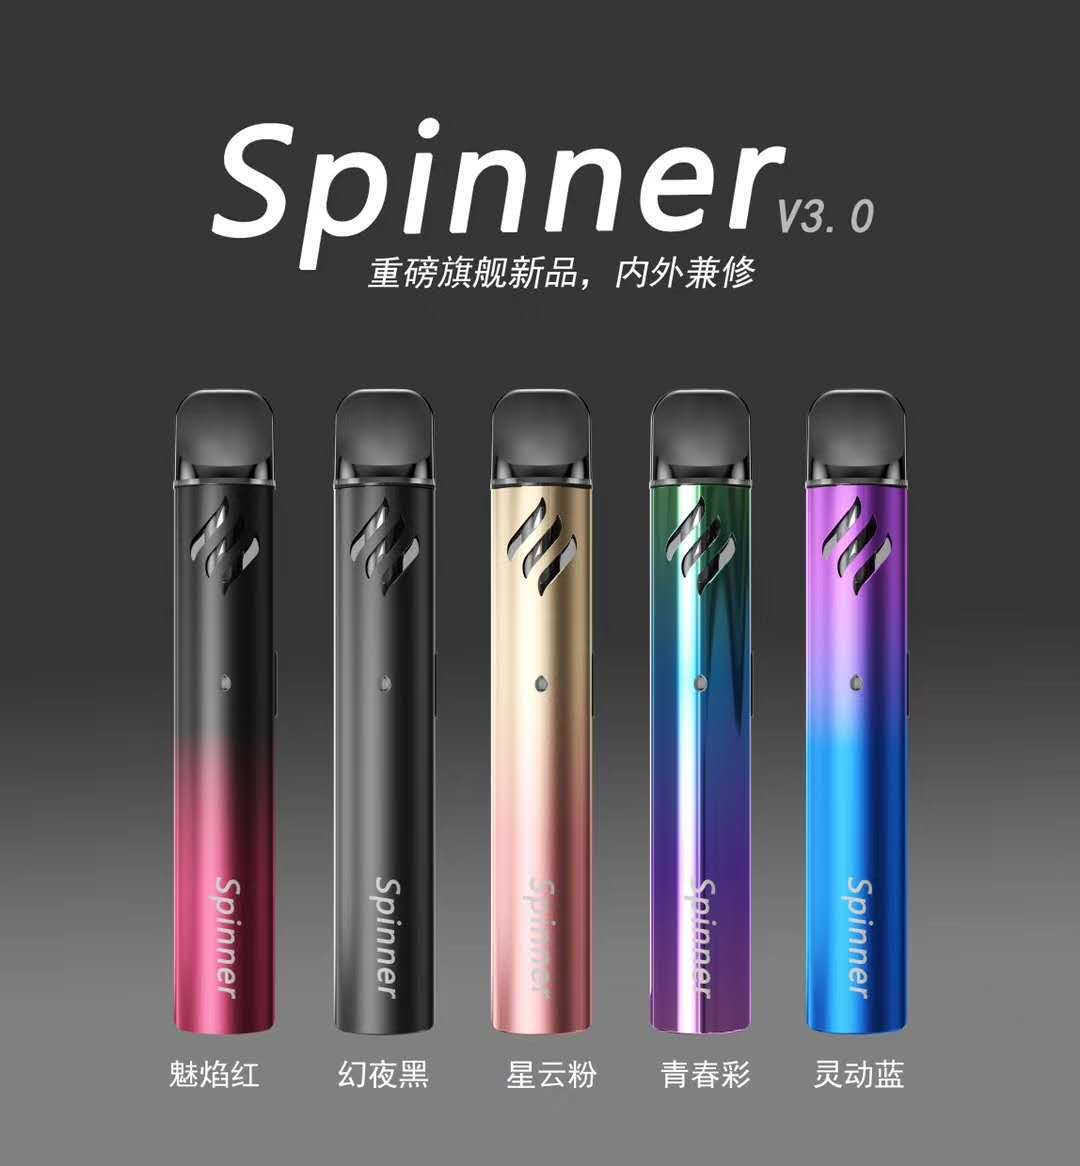 spinner3.0换蛋式